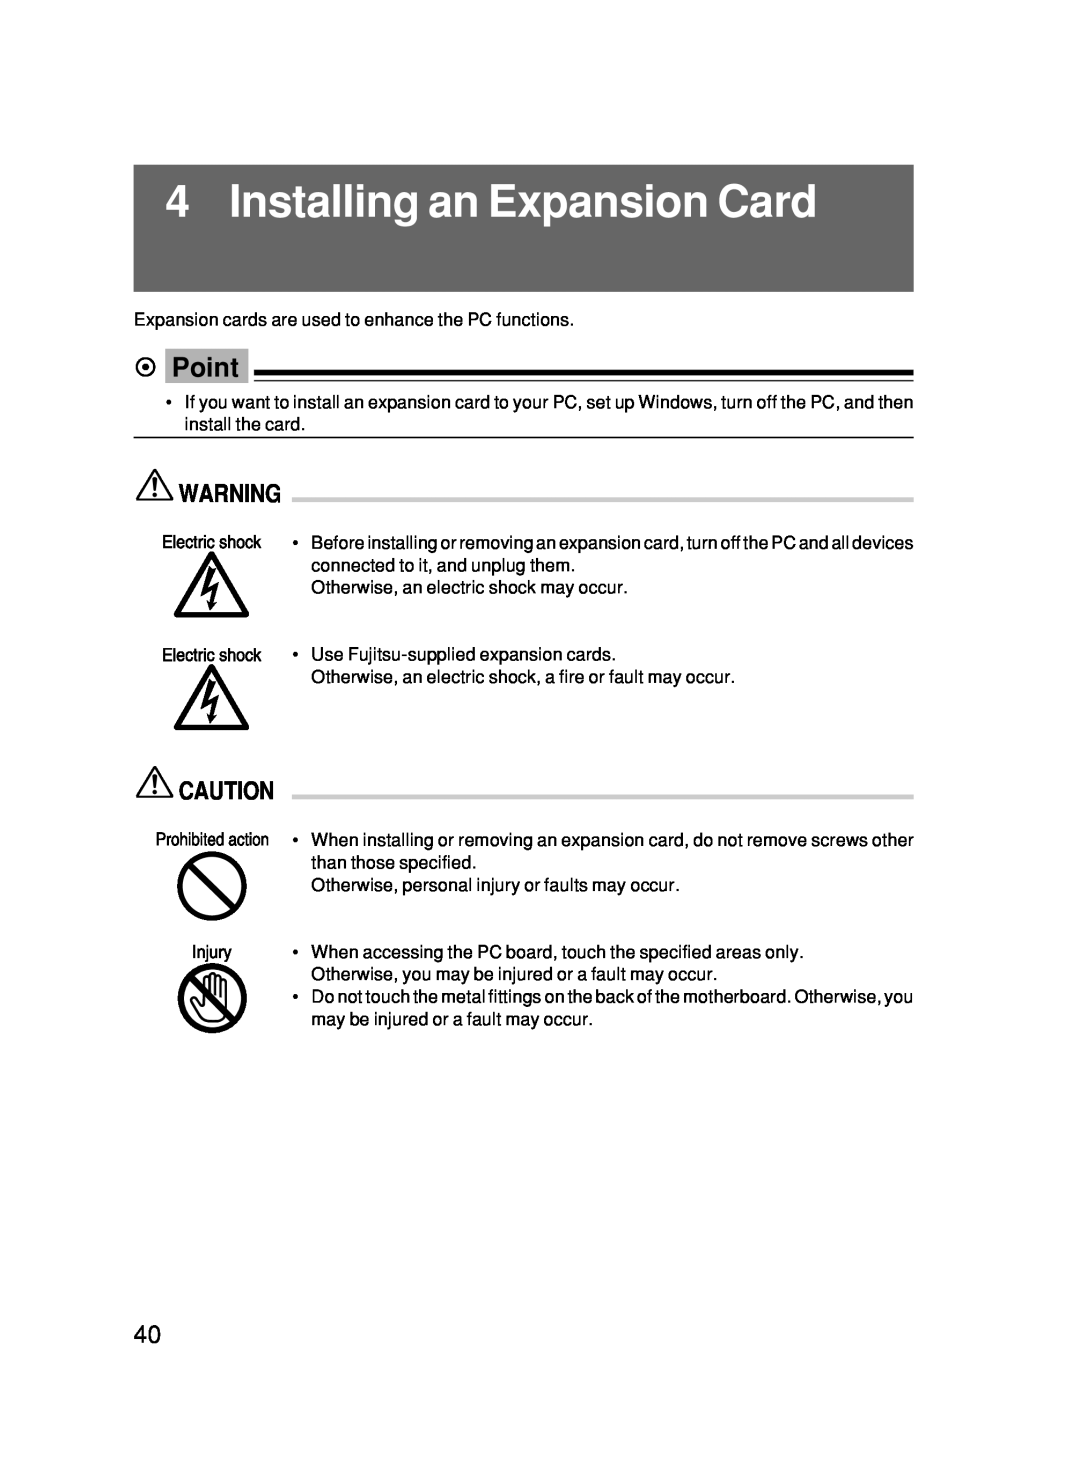 Fujitsu 500 user manual Installing an Expansion Card, Point 